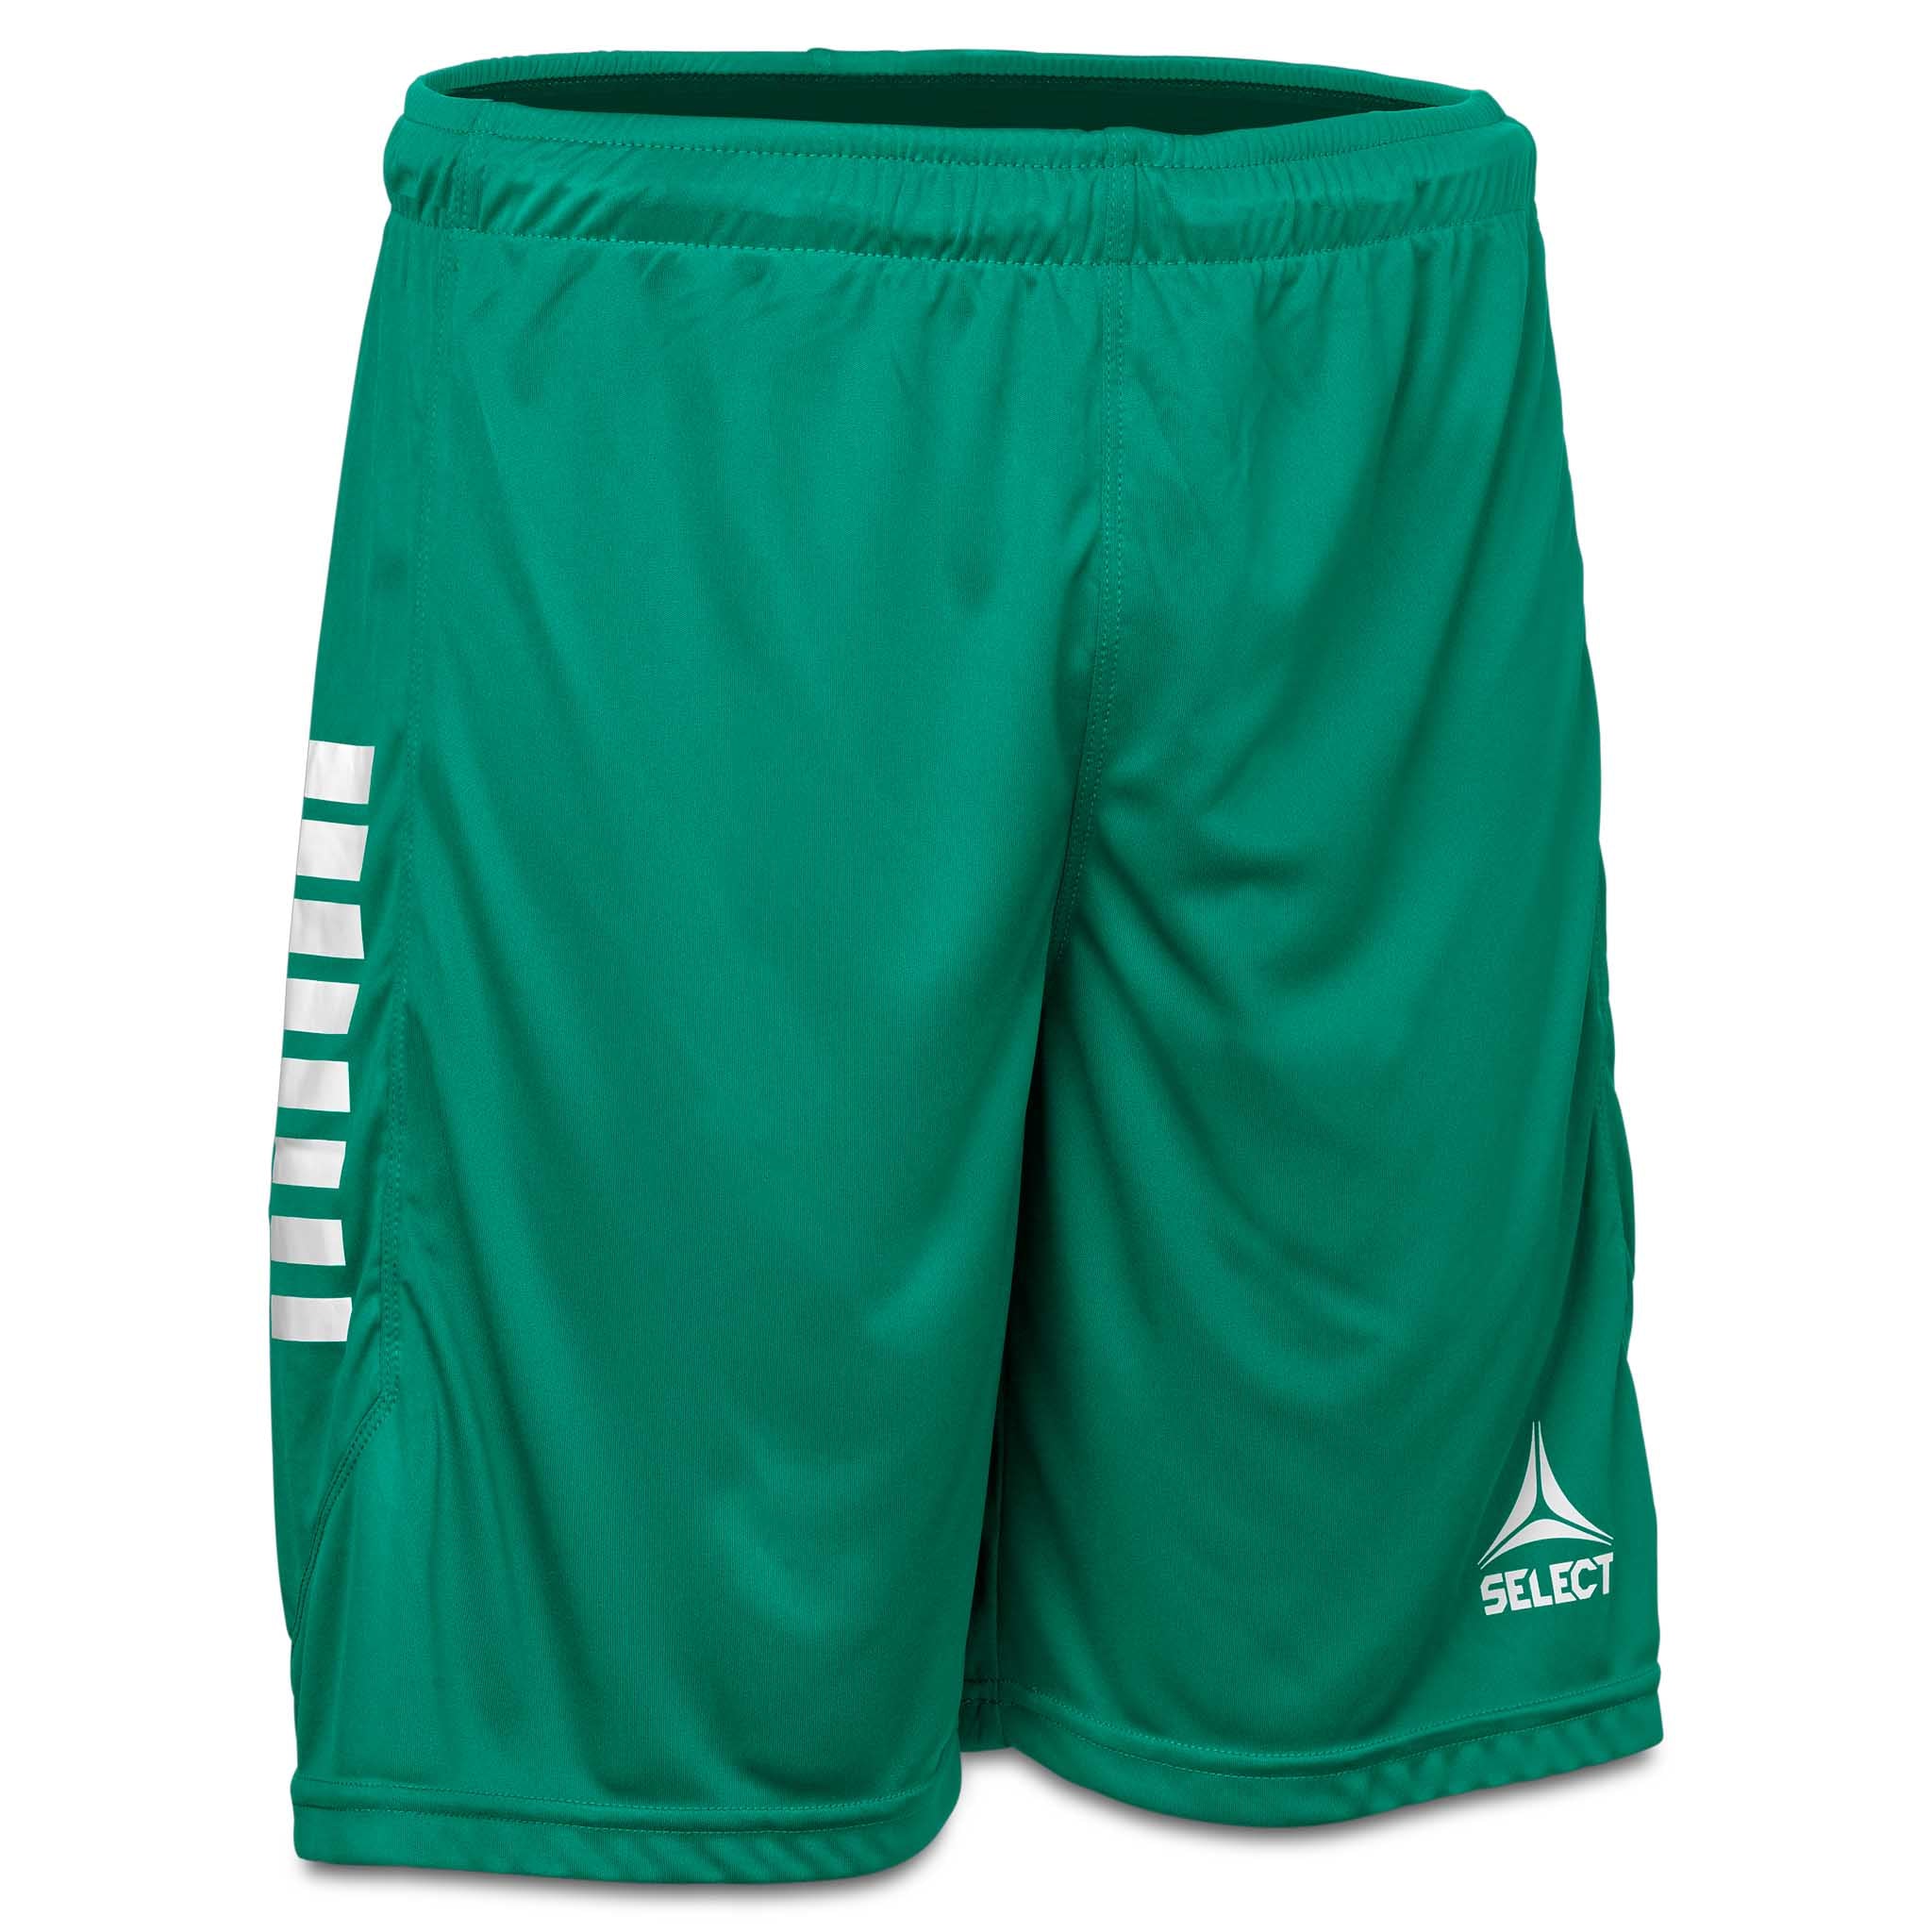 Monaco shorts #färg_grön/vit